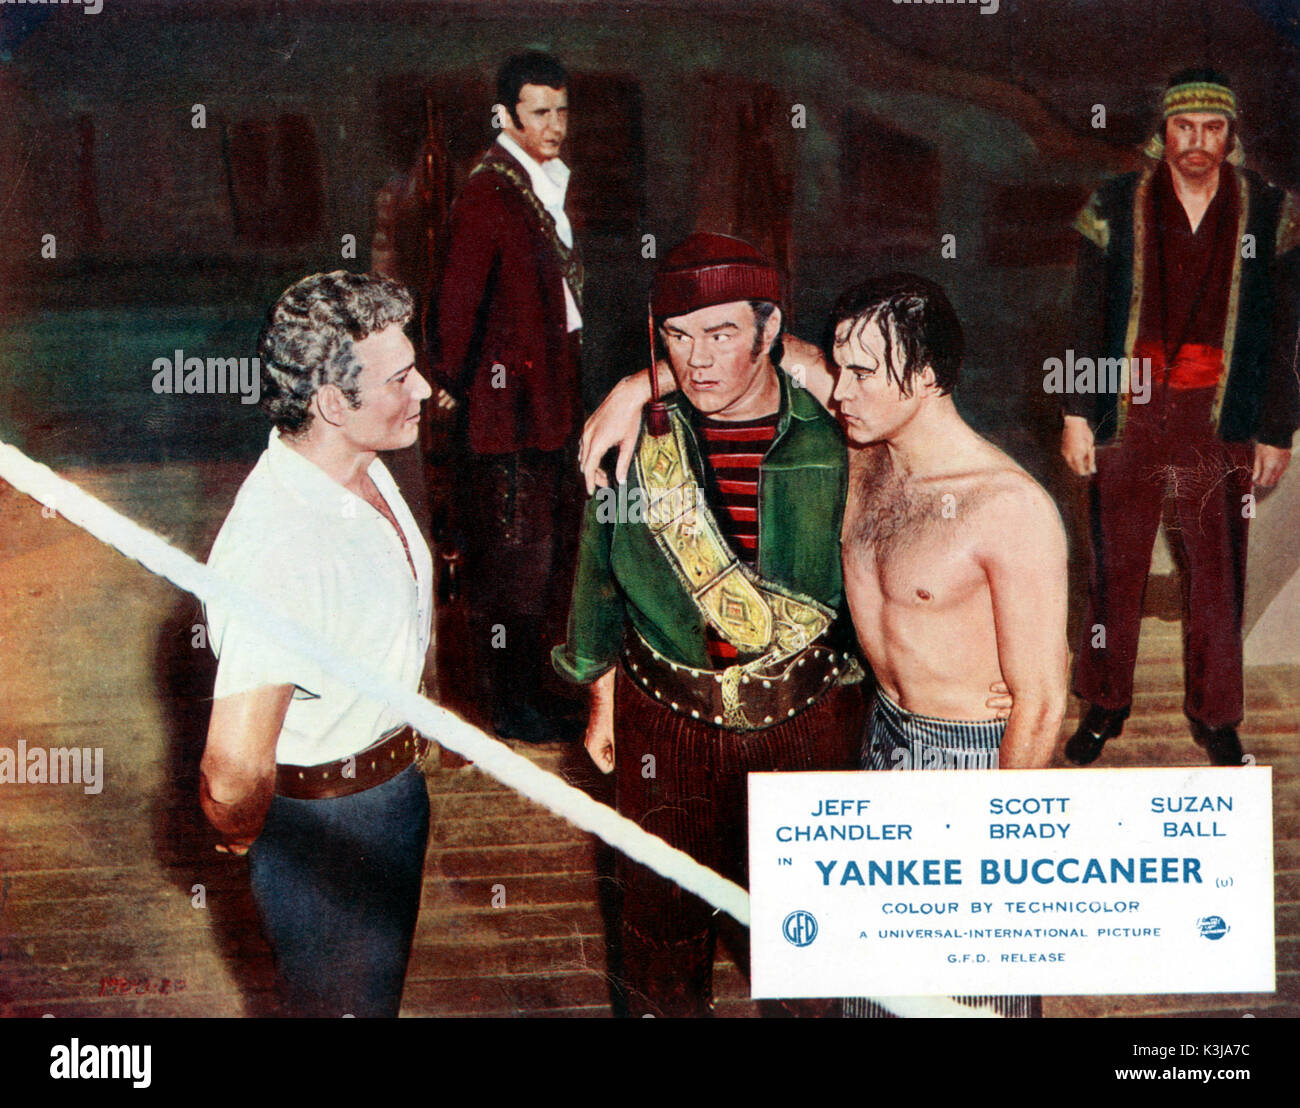 YANKEE BUCCANEER foreground - JEFF CHANDLER, GEORGE MATHEWS, SCOTT BRADY YANKEE BUCCANEER Stock Photo